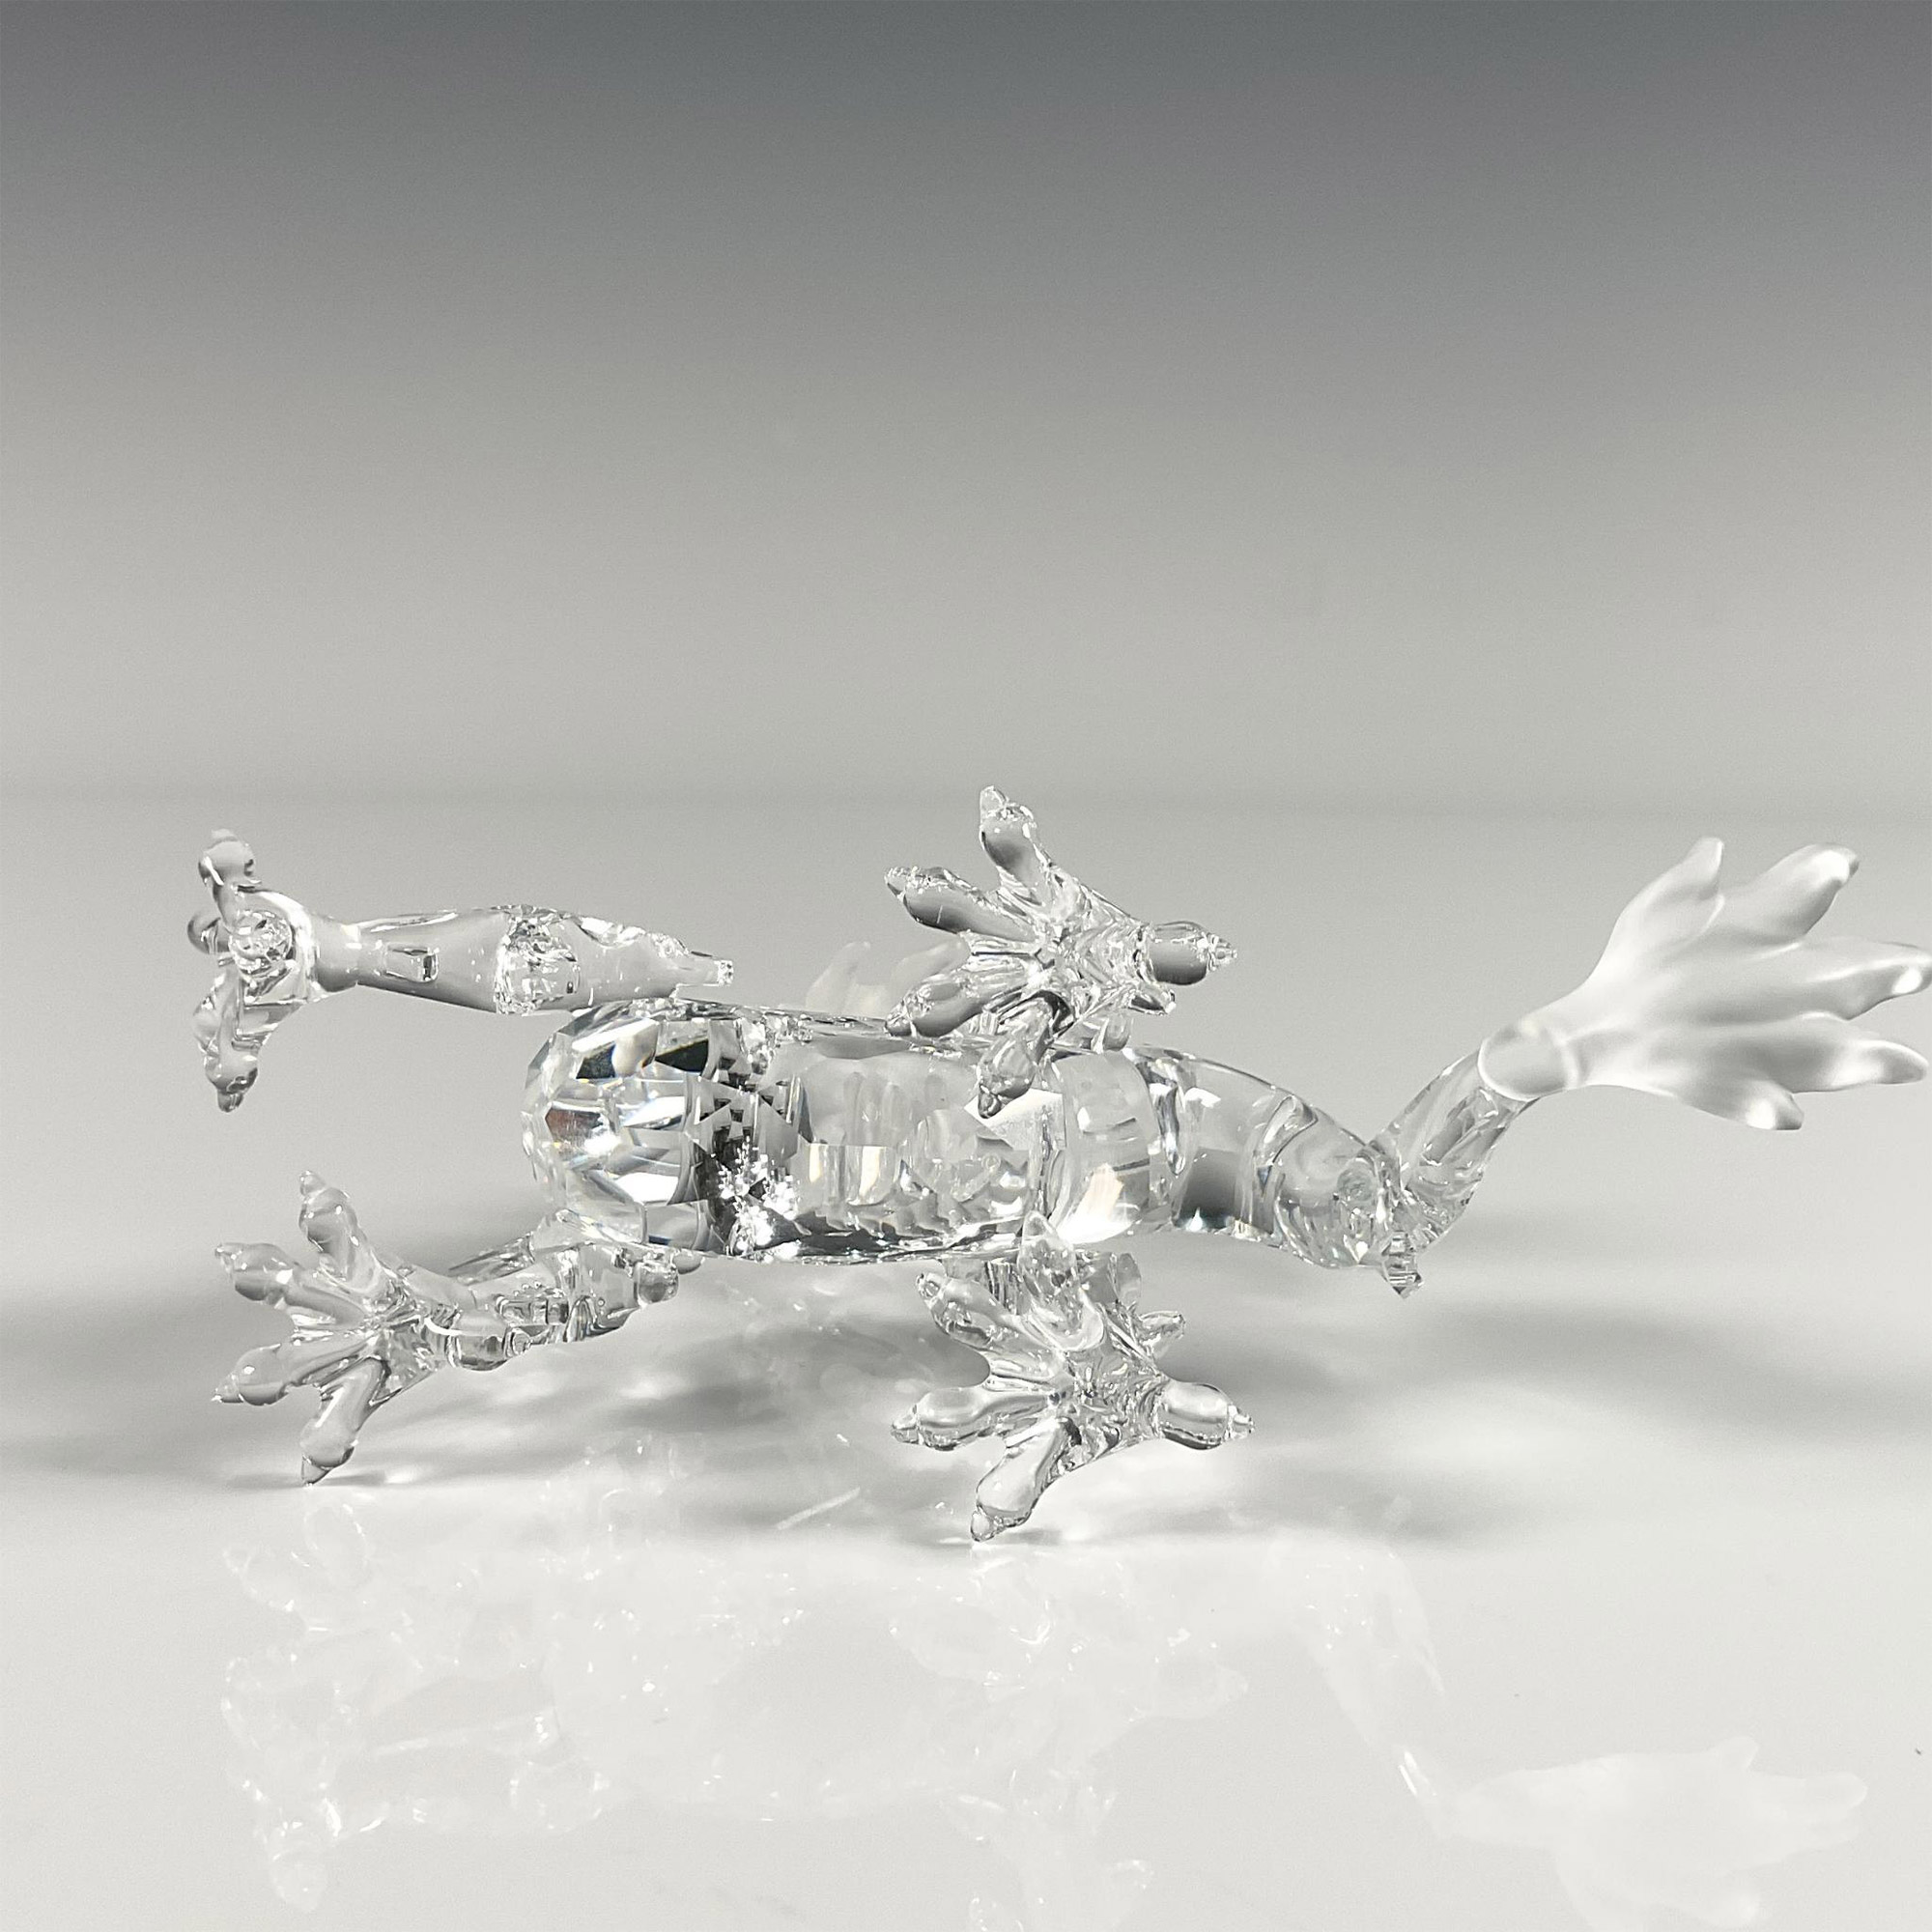 2pc Swarovski Crystal Figurine, Dragon with Stand - Image 4 of 4